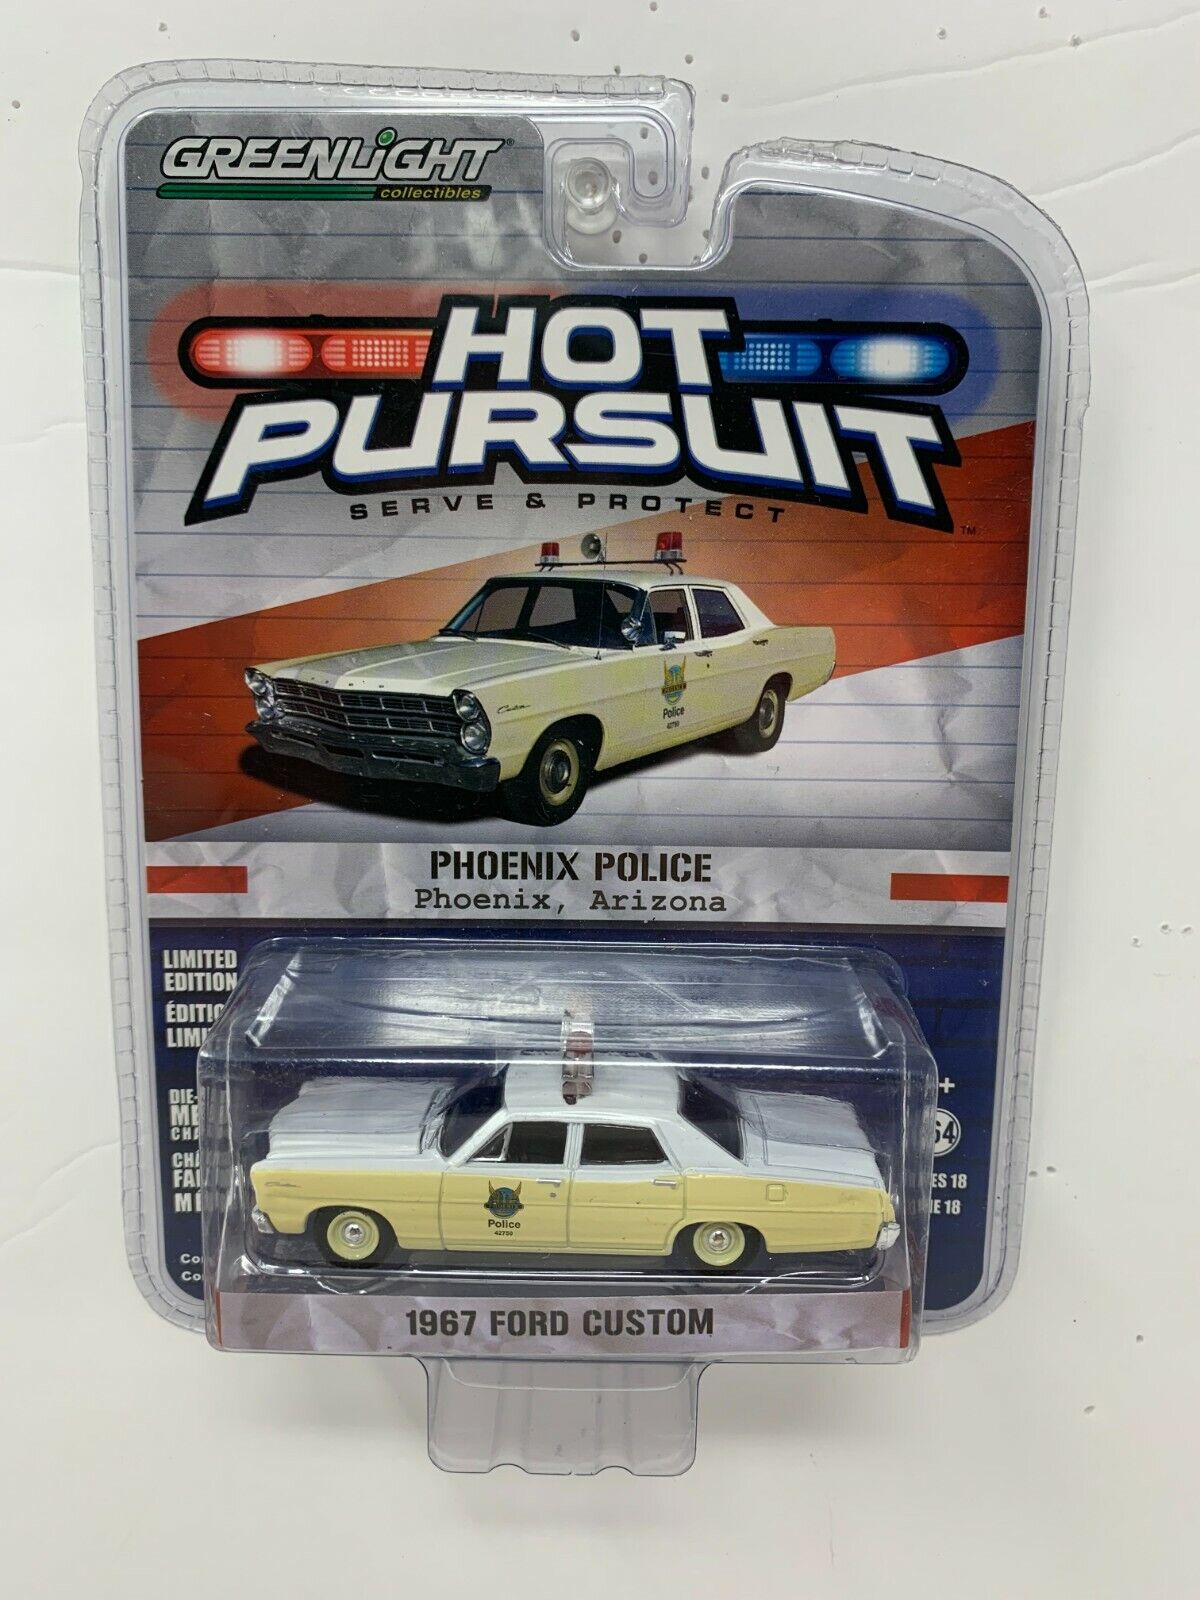 Greenlight Hot Pursuit Series 18 Phoenix Police 1967 Ford Custom 1:64 Diecast